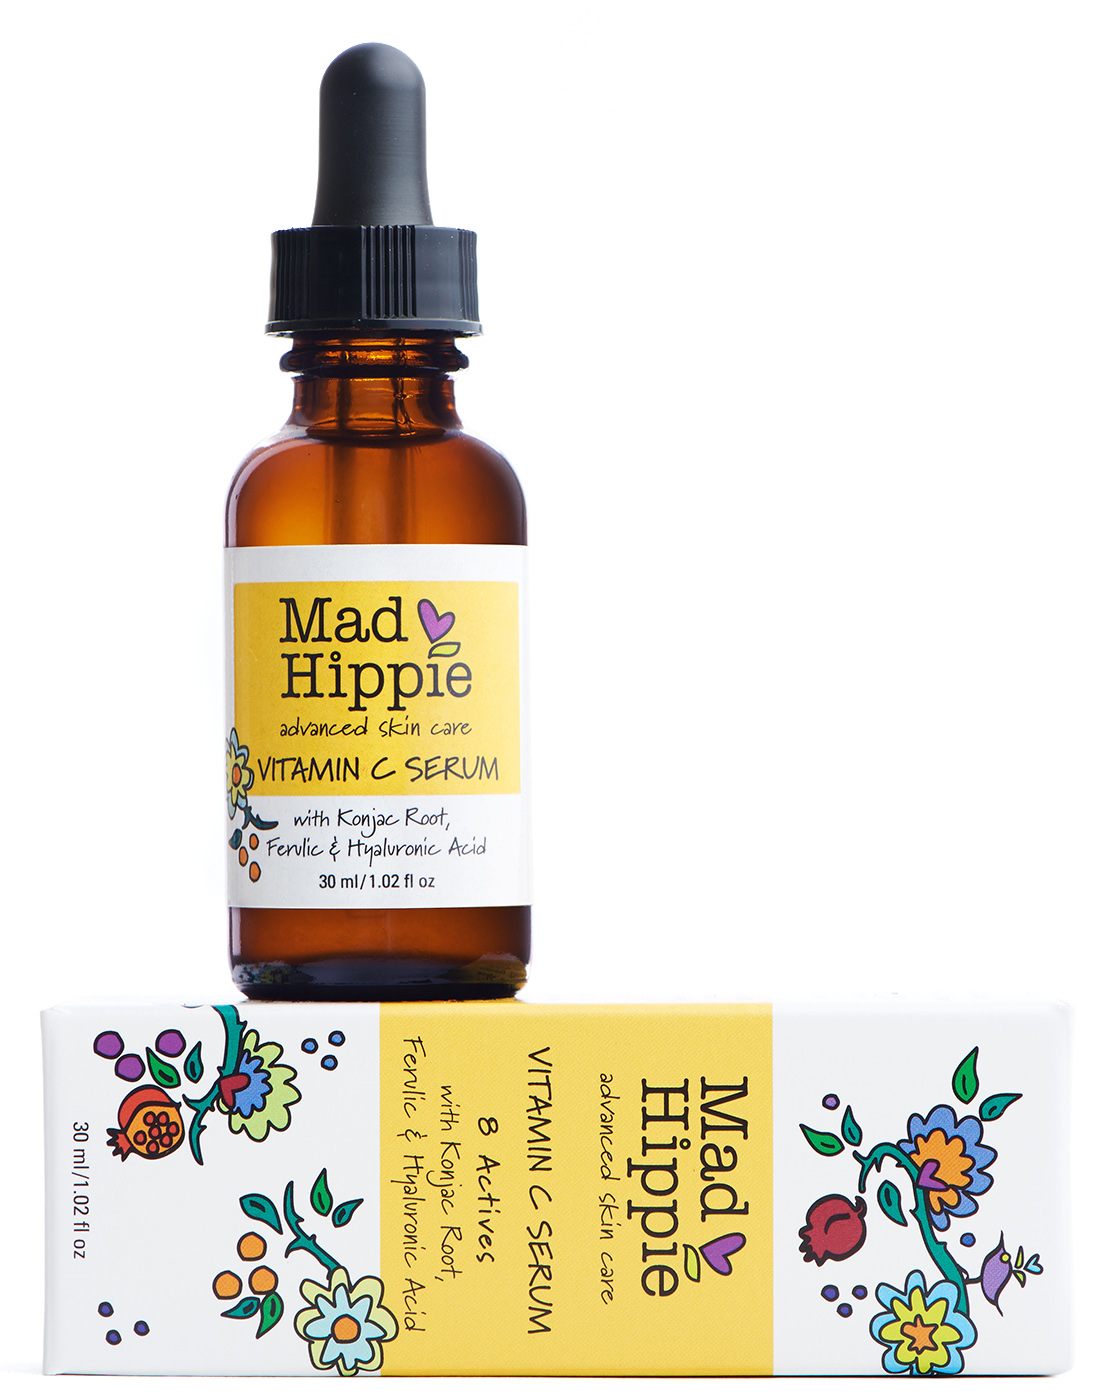 Mad Hippie - Main Product Images - Vitamin C Serum.jpg